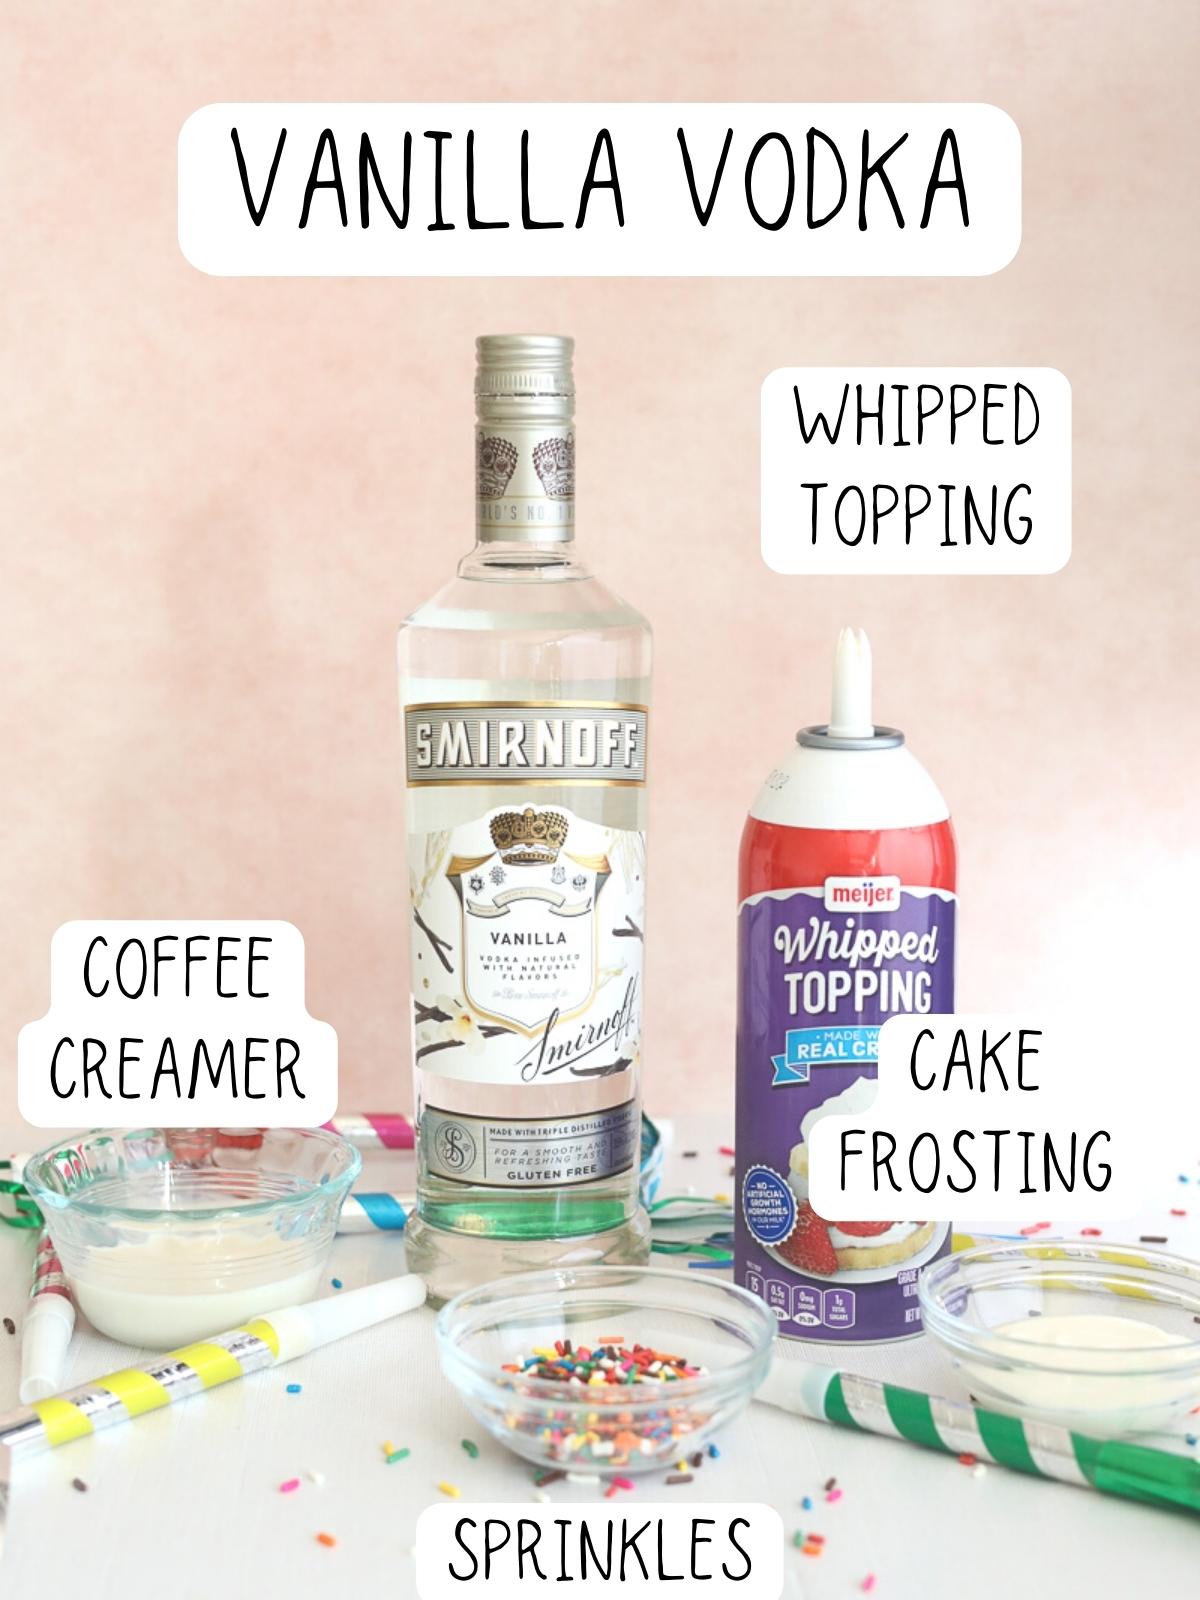 ingredients for birthday cake shots, including vanilla vodka, creamer, sprinkles